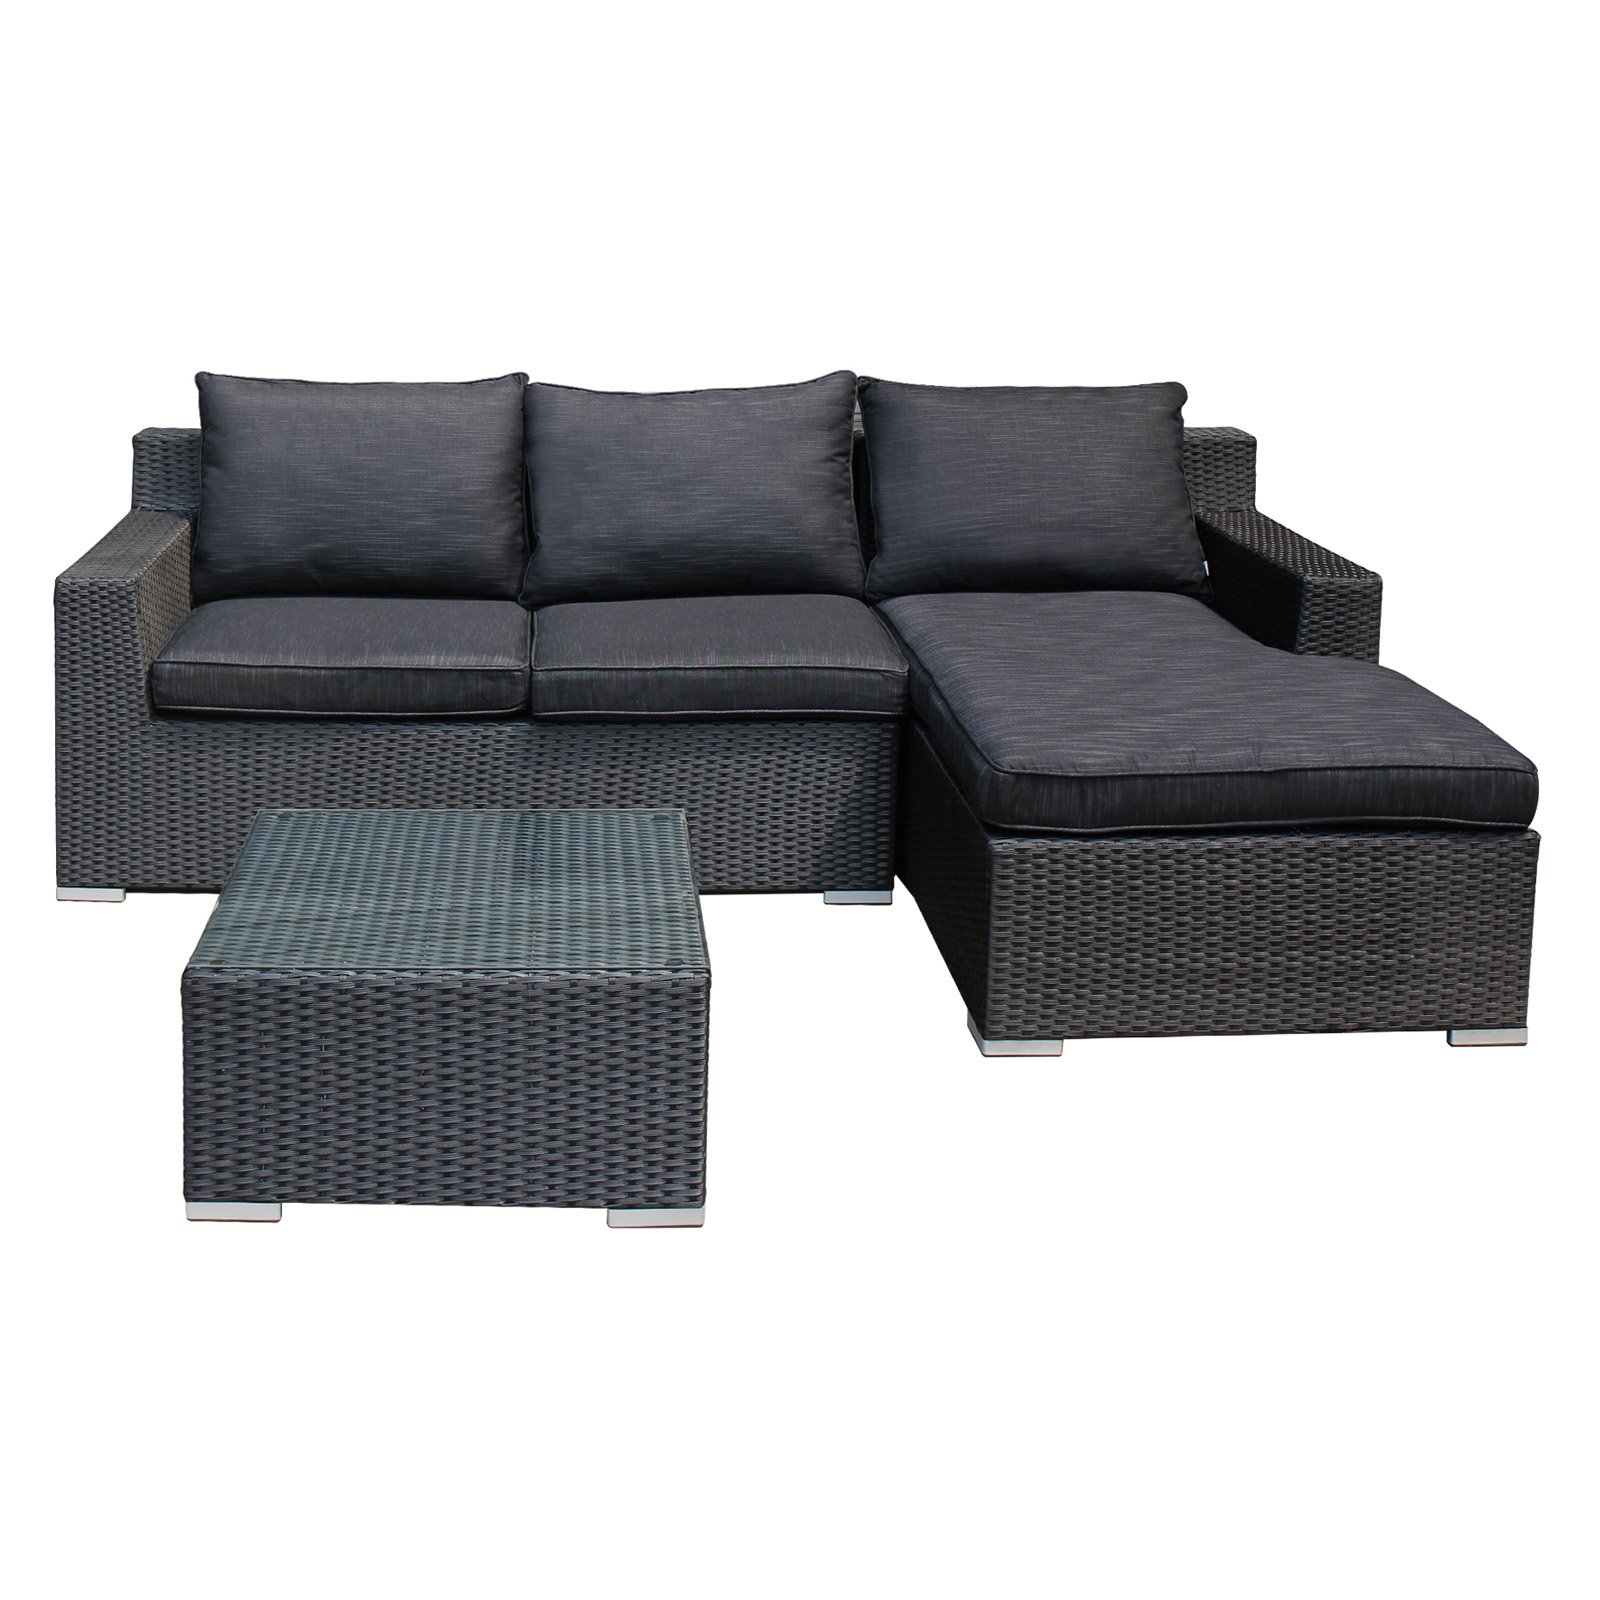 Magari Furniture Complete Outdoor Resin Wicker 3 Piece Patio Conversation Set - image 2 of 7